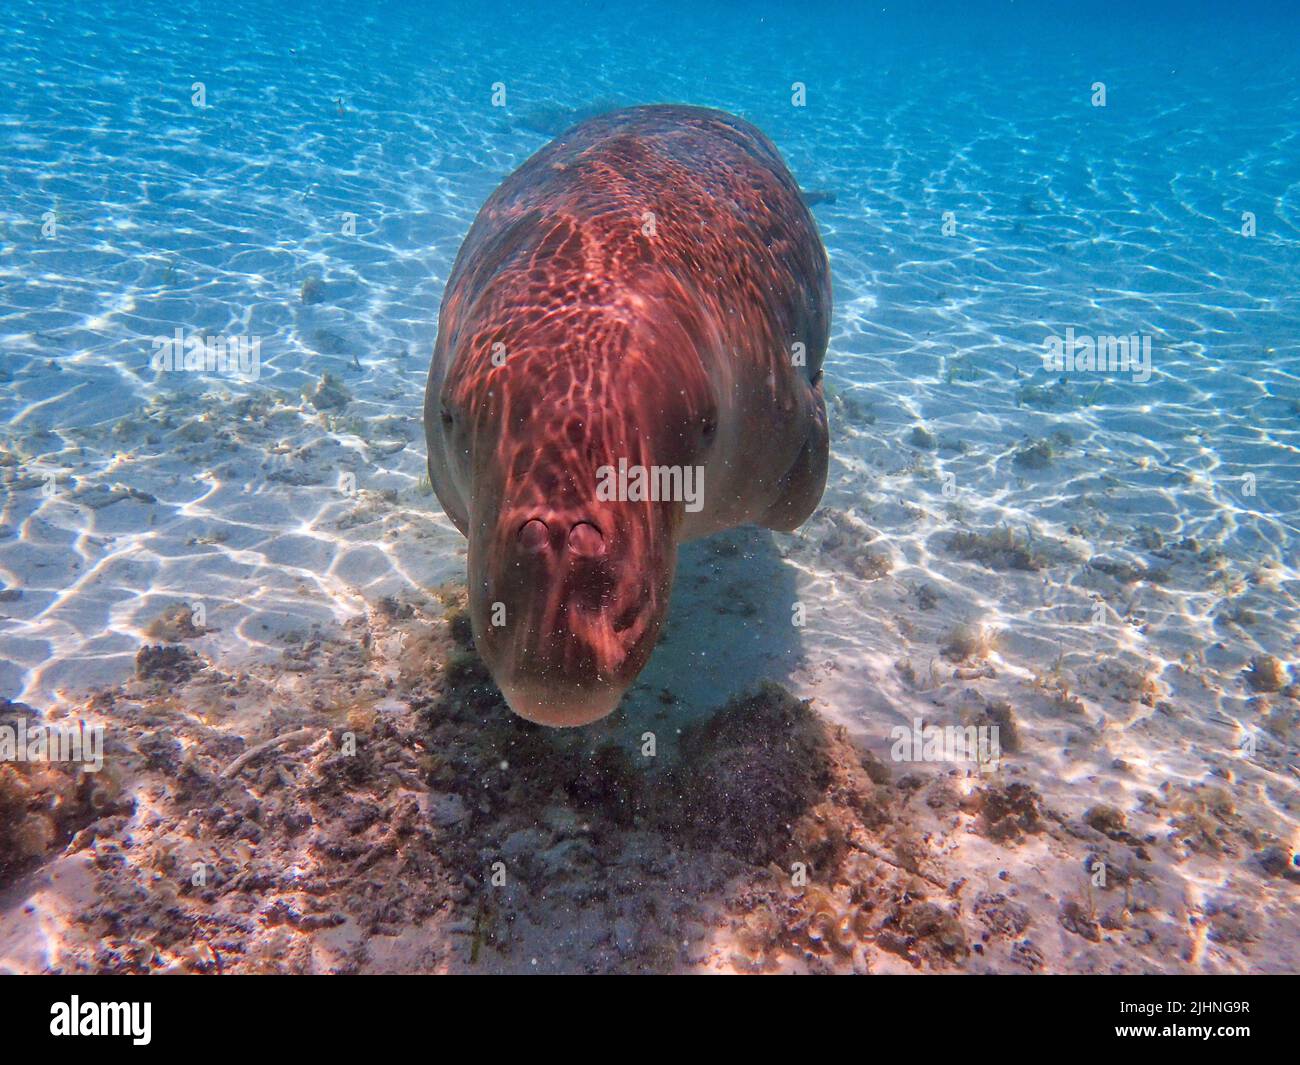 Indonesia Alor Island - Manatee - Lembu laut - marine mammal Stock Photo